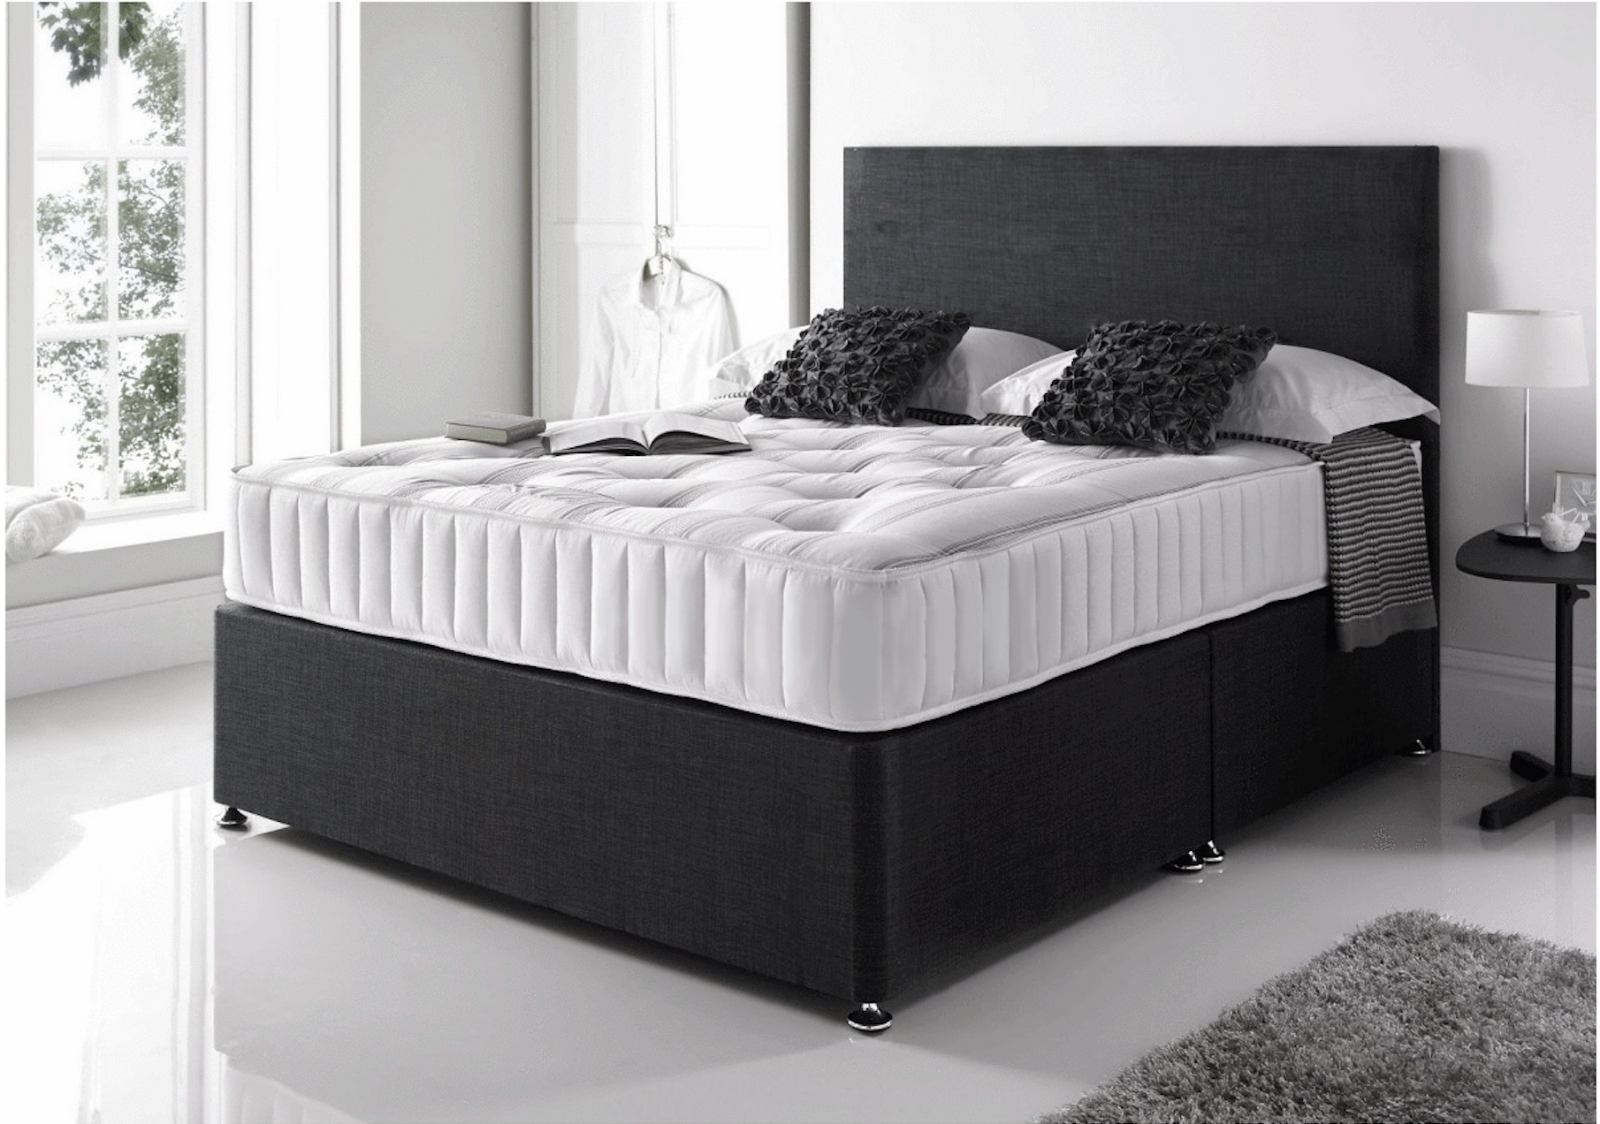 Beds.co.uk Divan Bed Set with Spring Memory Foam Mattress